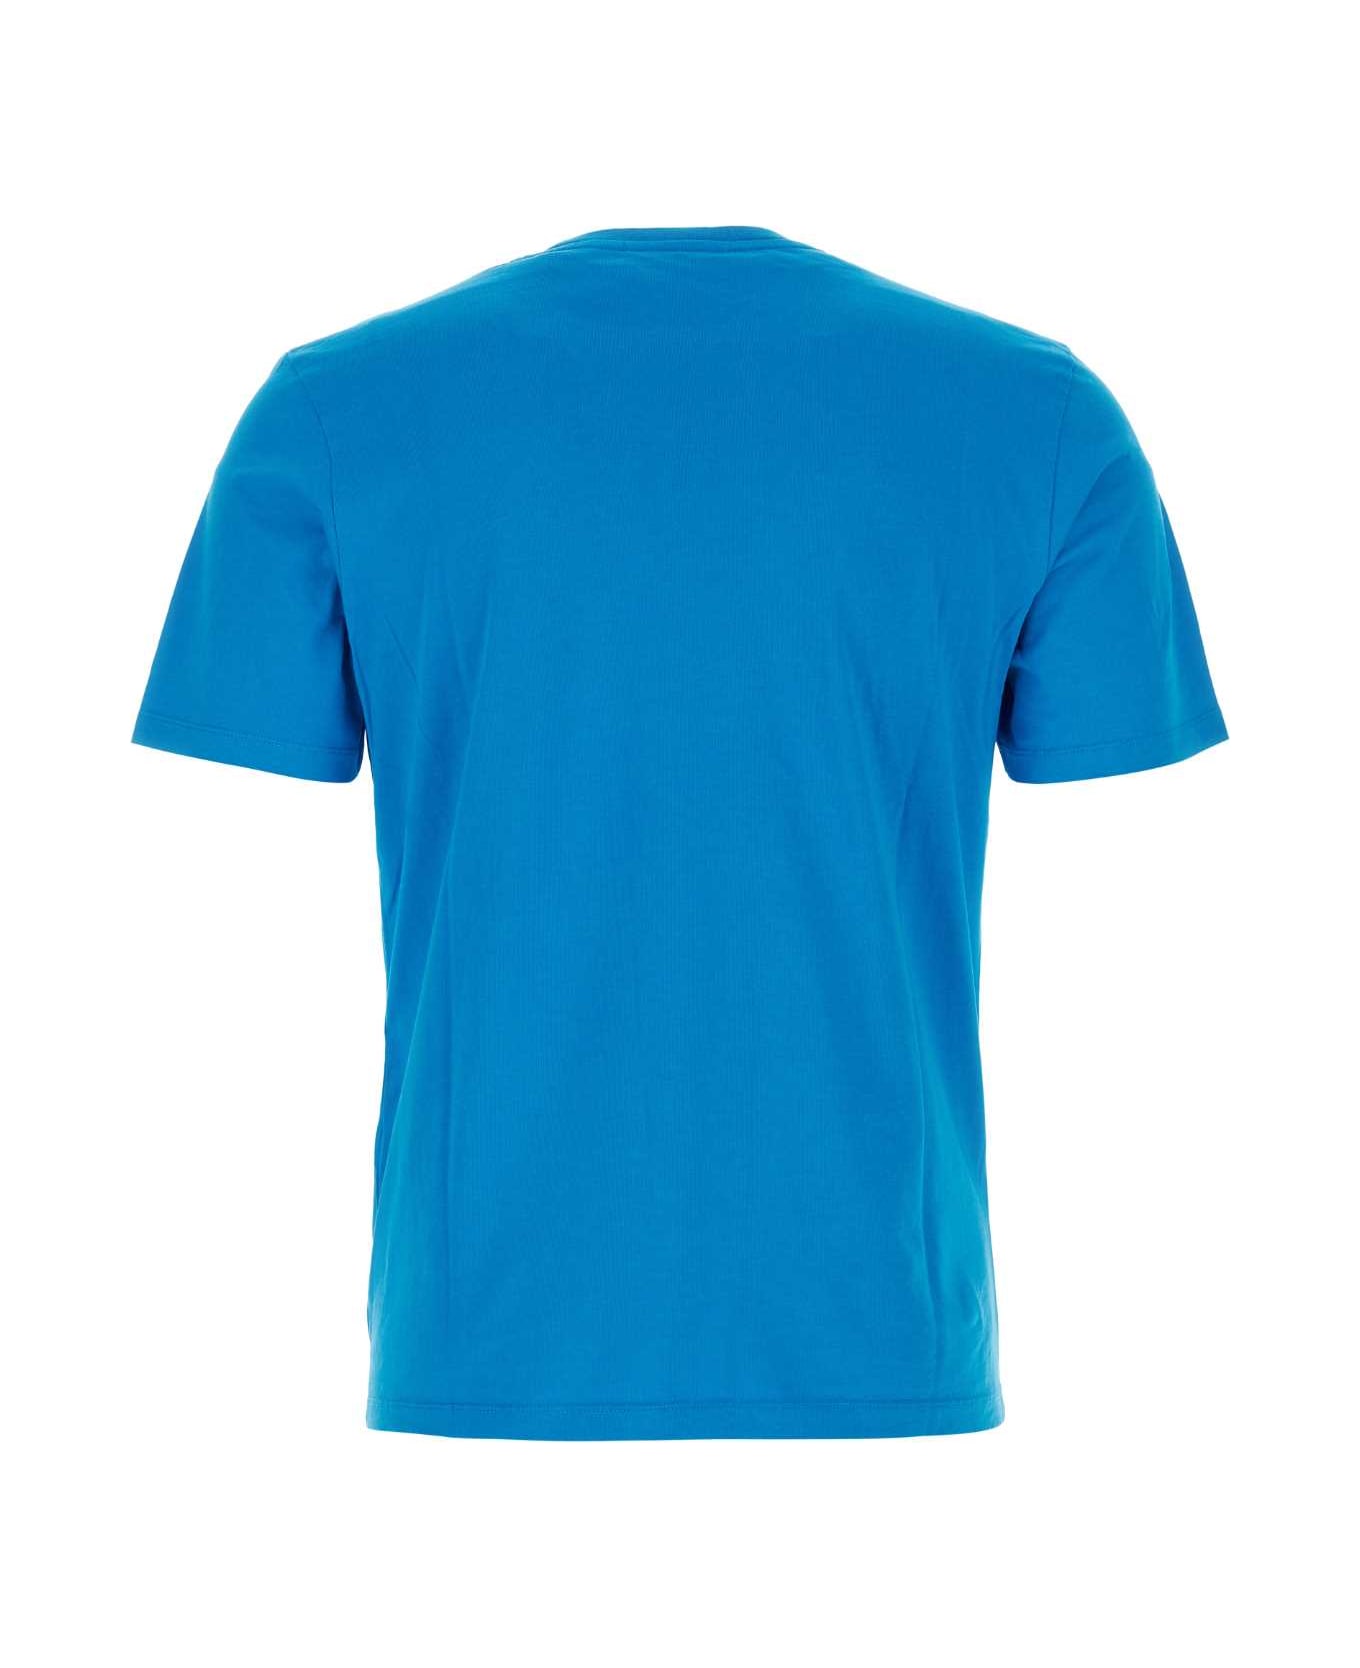 Maison Kitsuné Turquoise Cotton T-shirt - ENAMELBLUE